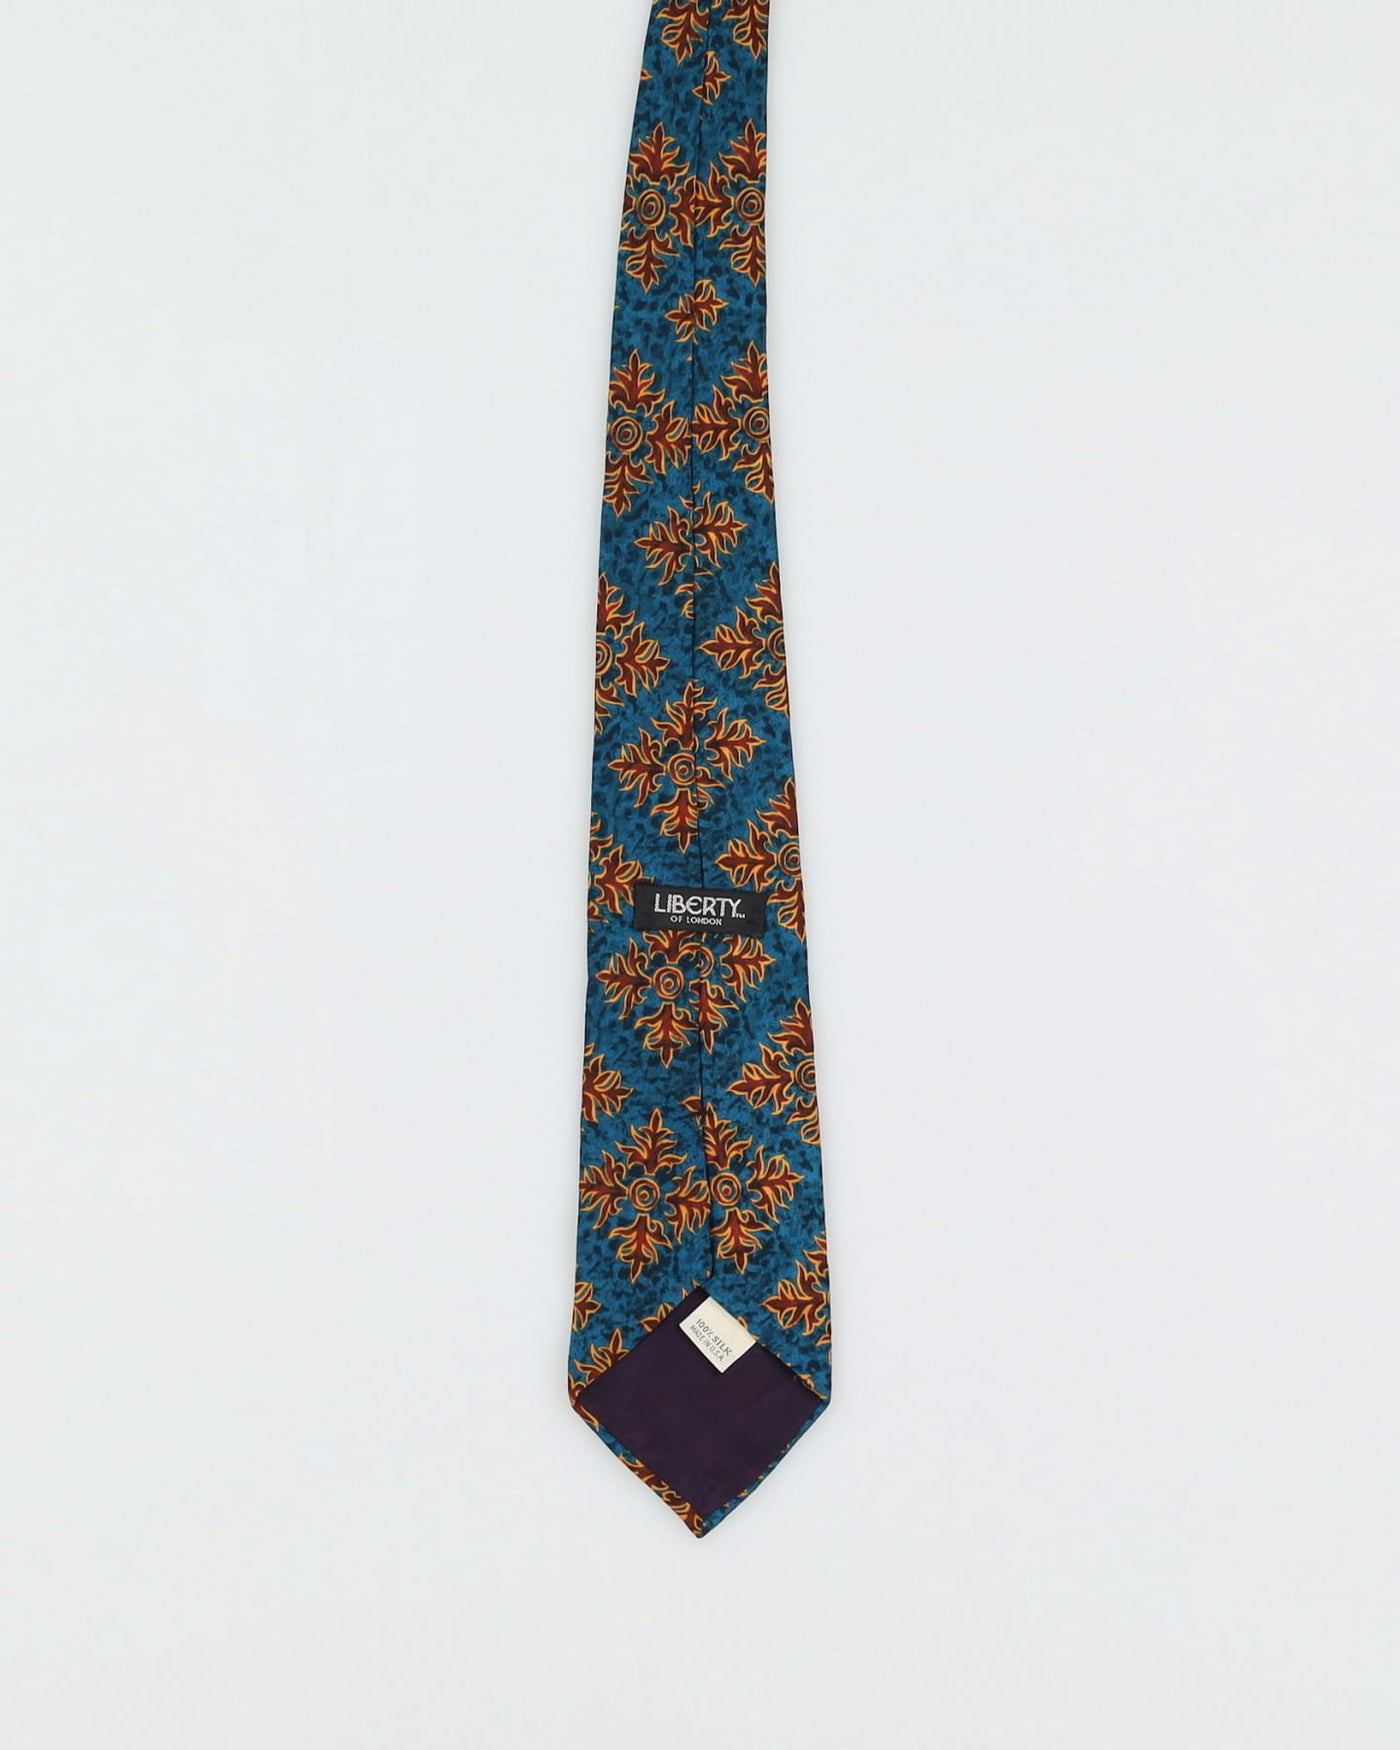 Vintage Liberty Blue / Brown Patterned Tie